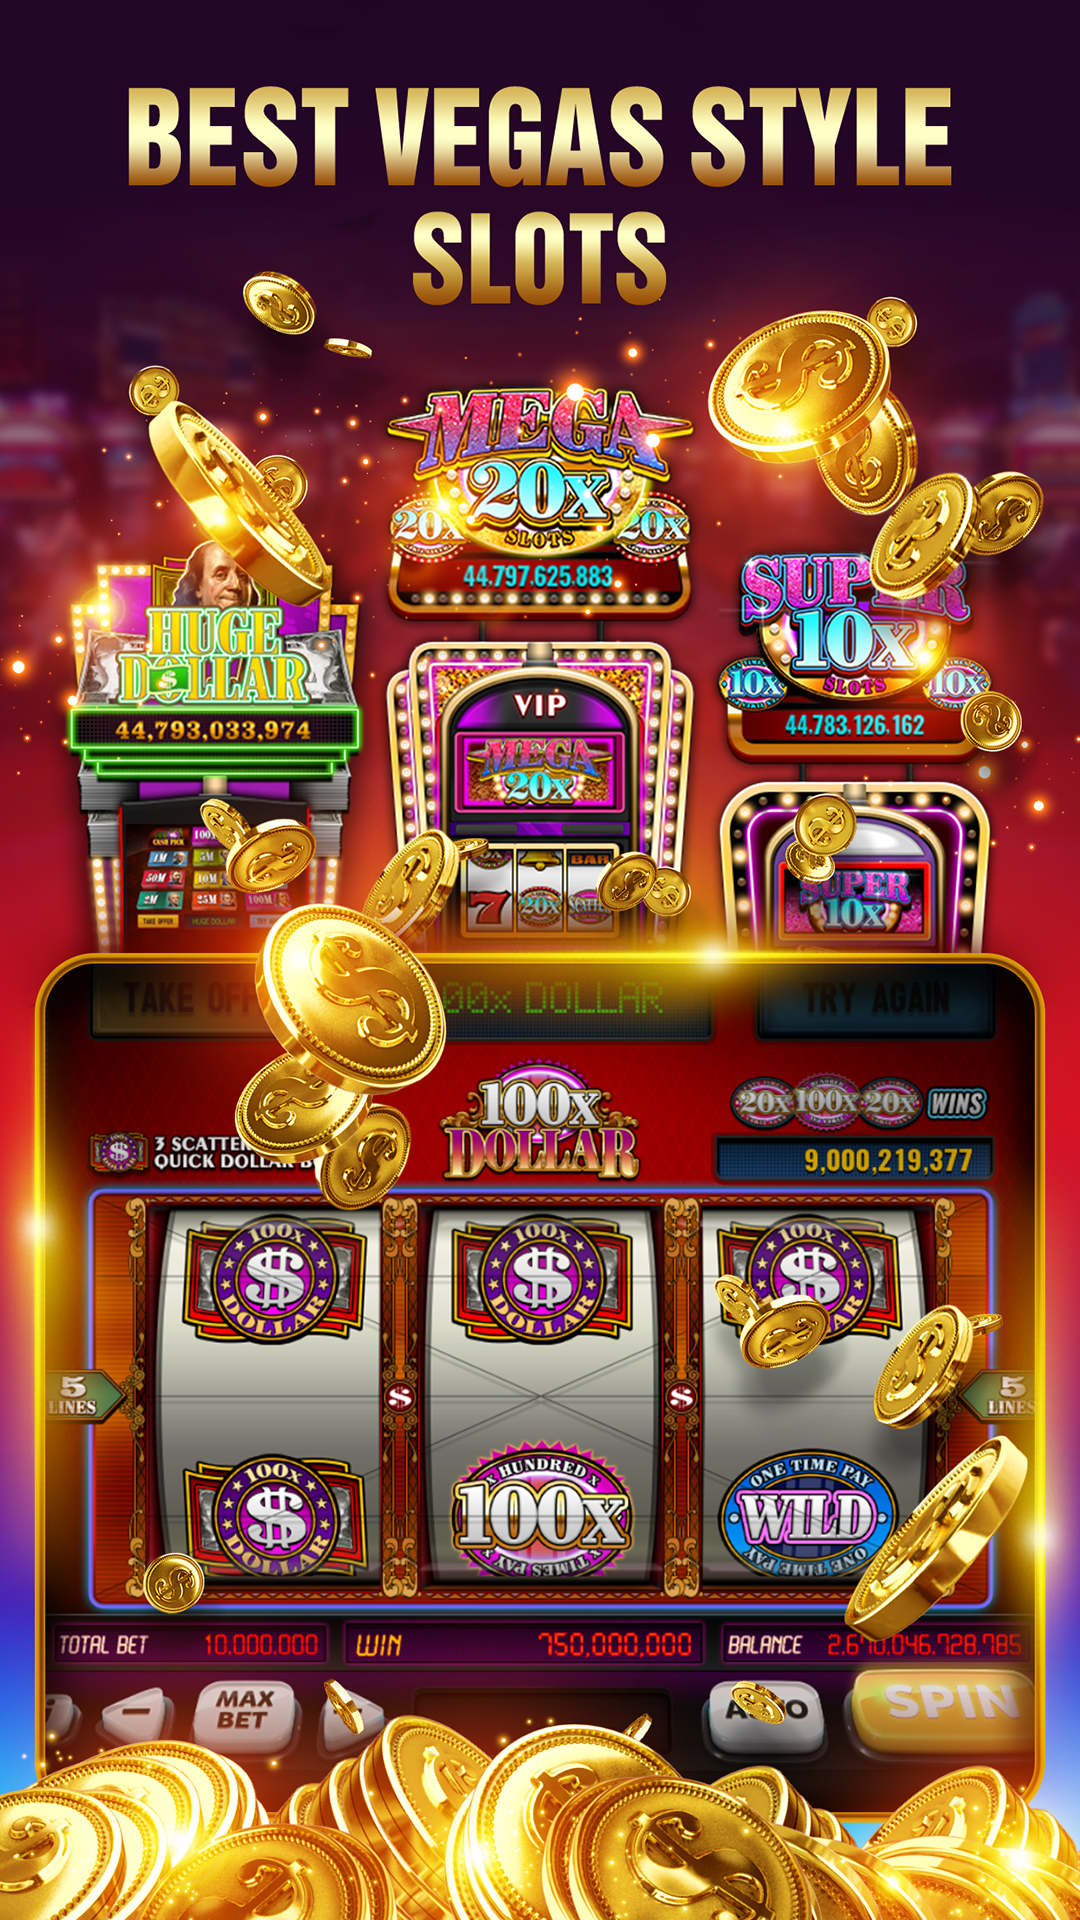 New Online Casino Games